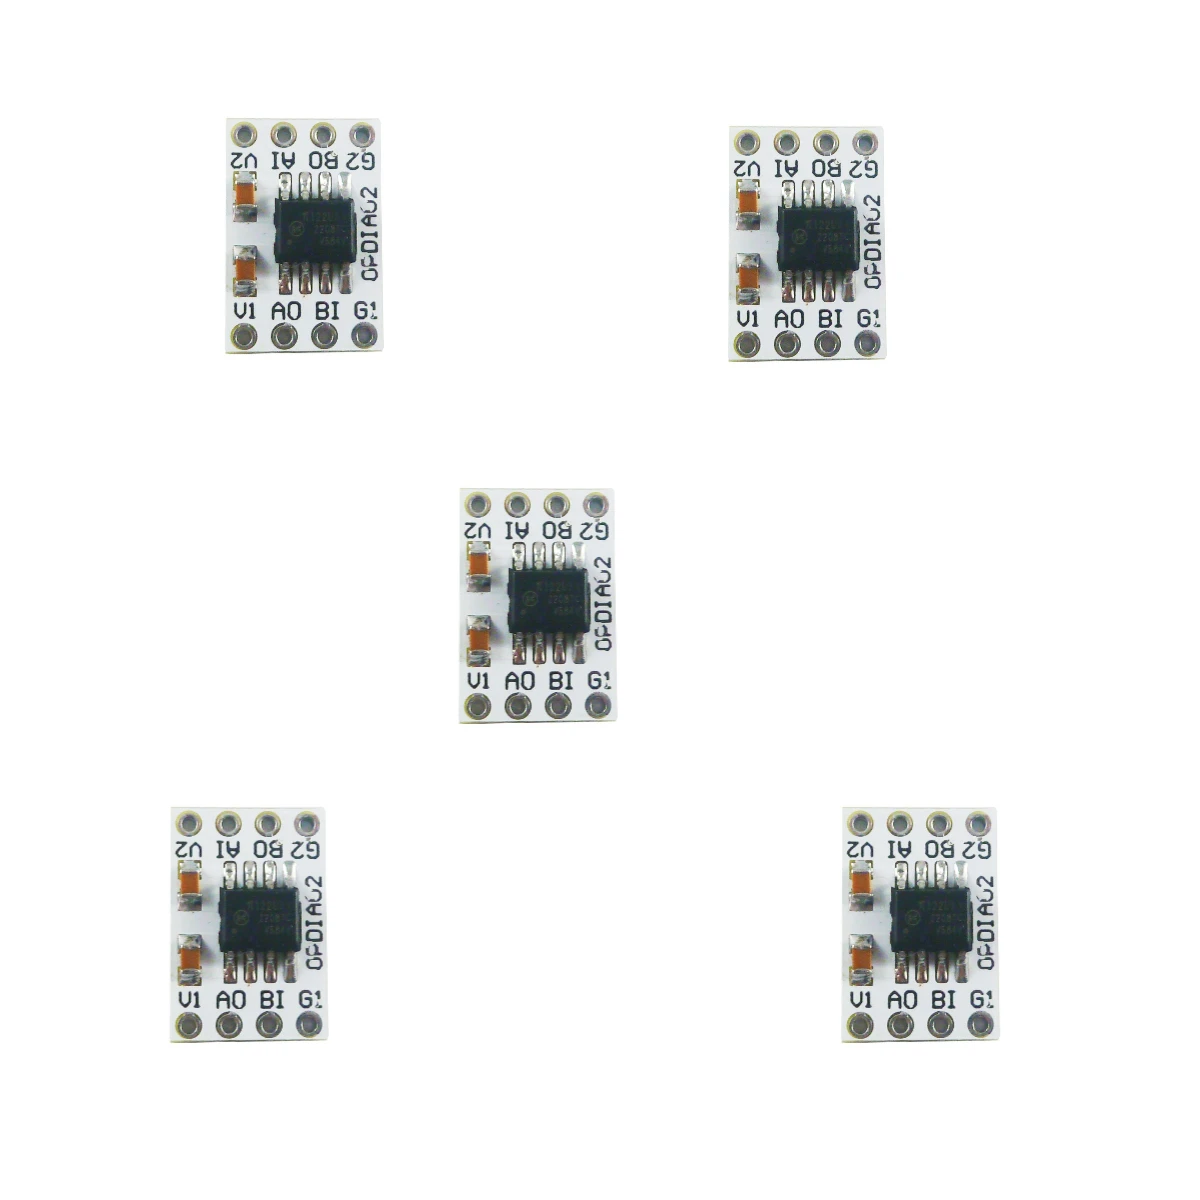 

DC 3.3V 5V 2/4/8Ch 3000Vrms 150Kbps Digital Isolators TTL LvTTL Level Converter Module for Arduino UNO MEGA Raspberry pi pico w